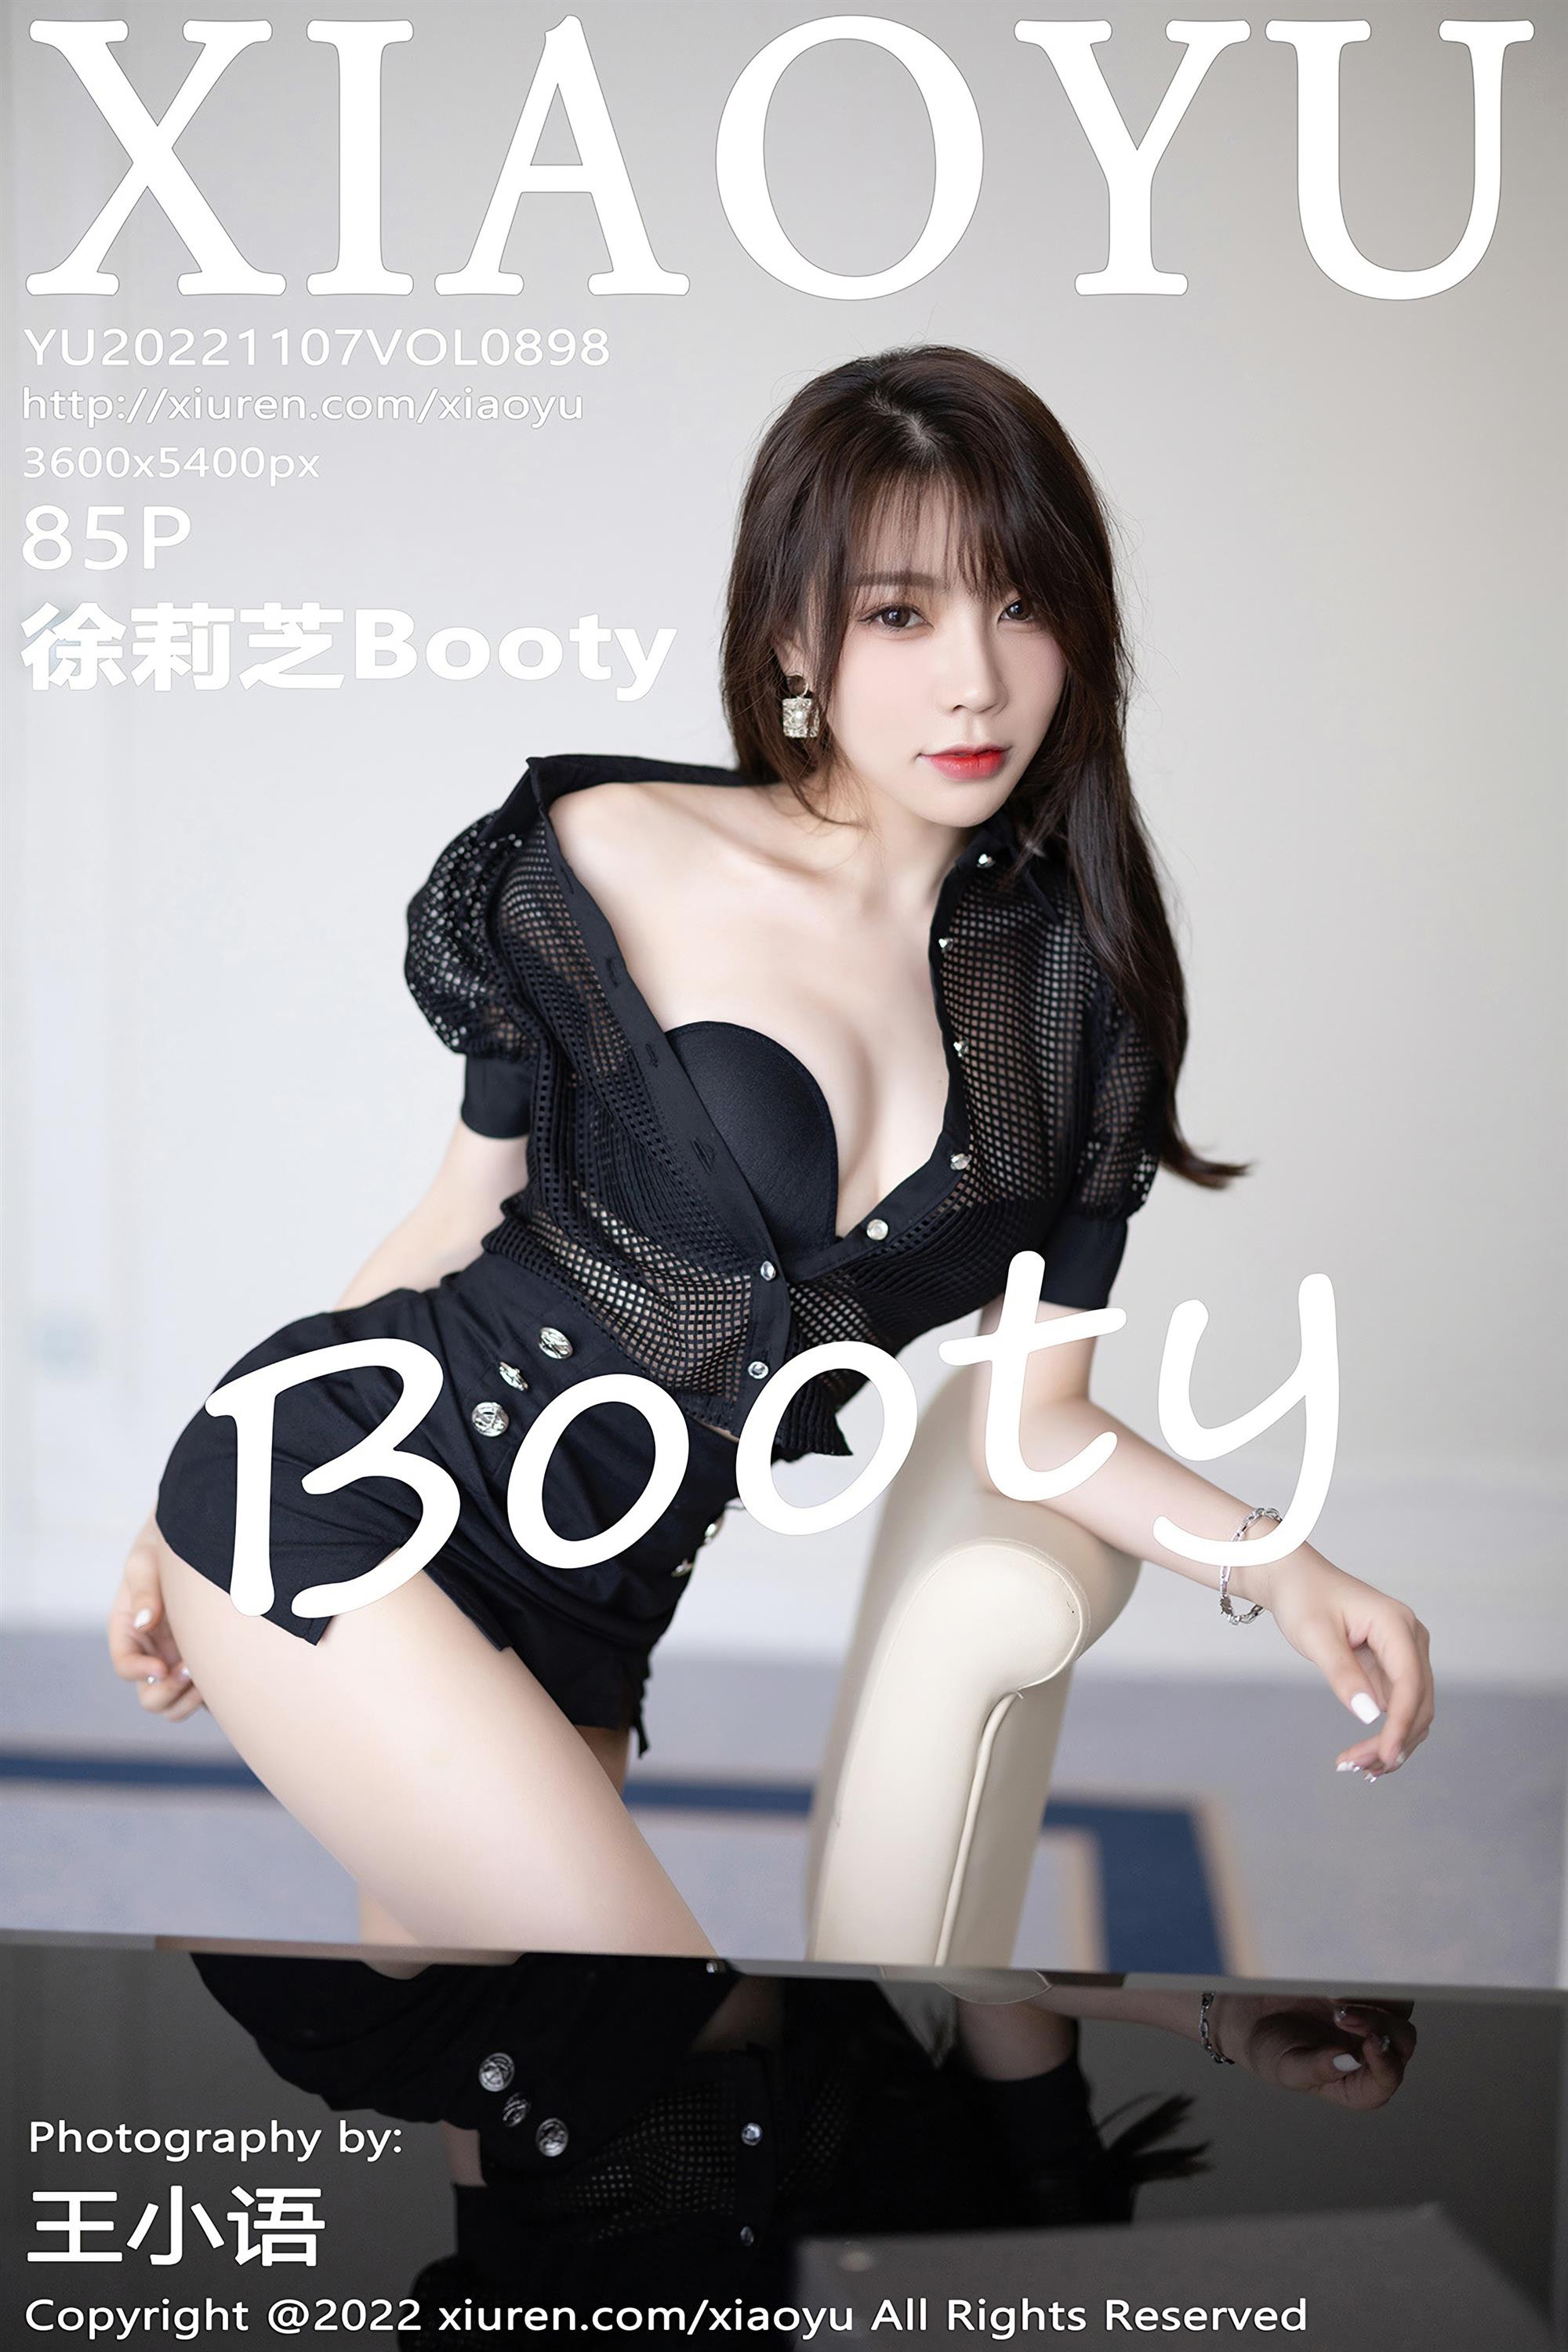 XIAOYU 语画界 2022.11.07 Vol.898 徐莉芝Booty - 86.jpg